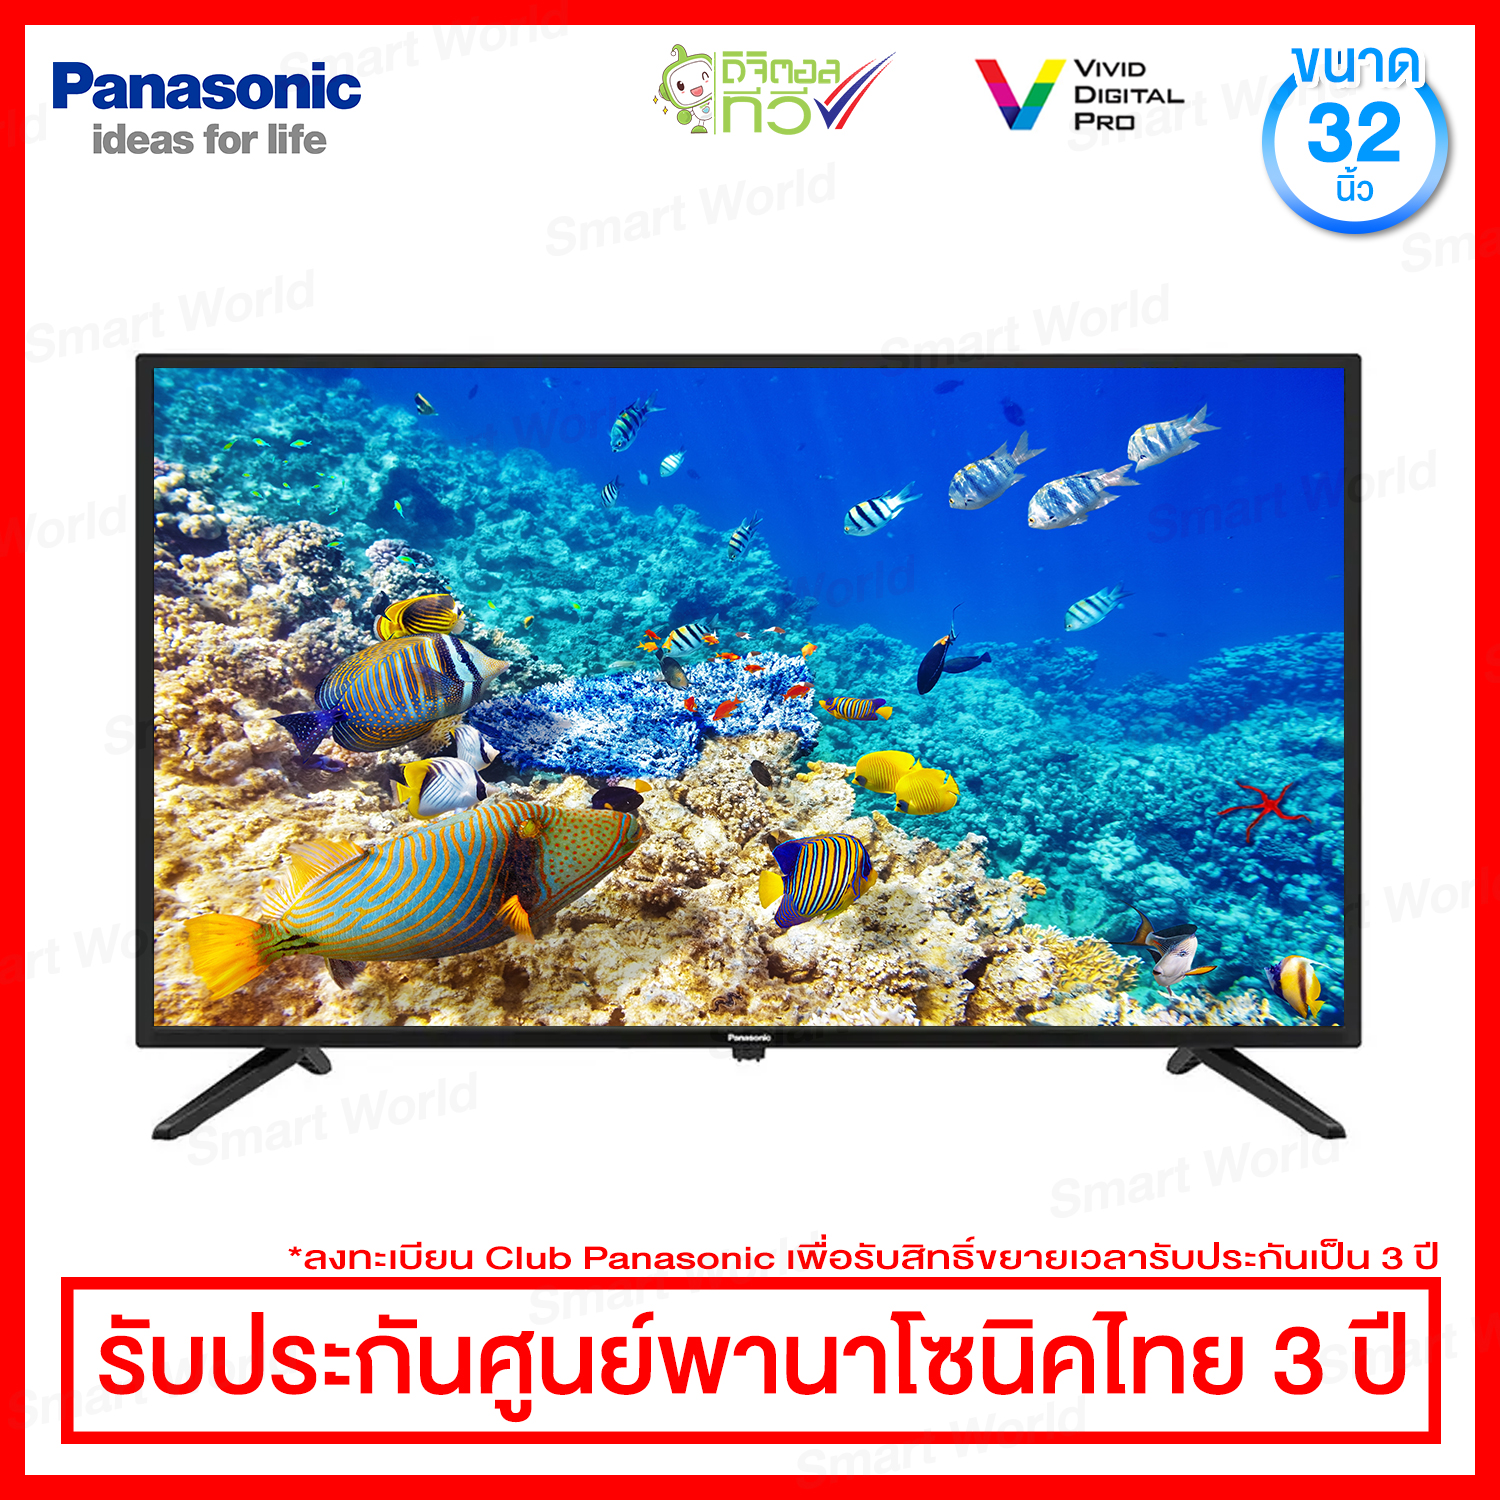 Panasonic LED Digital TV (HD) 32 นิ้ว รุ่น TH-32H410T